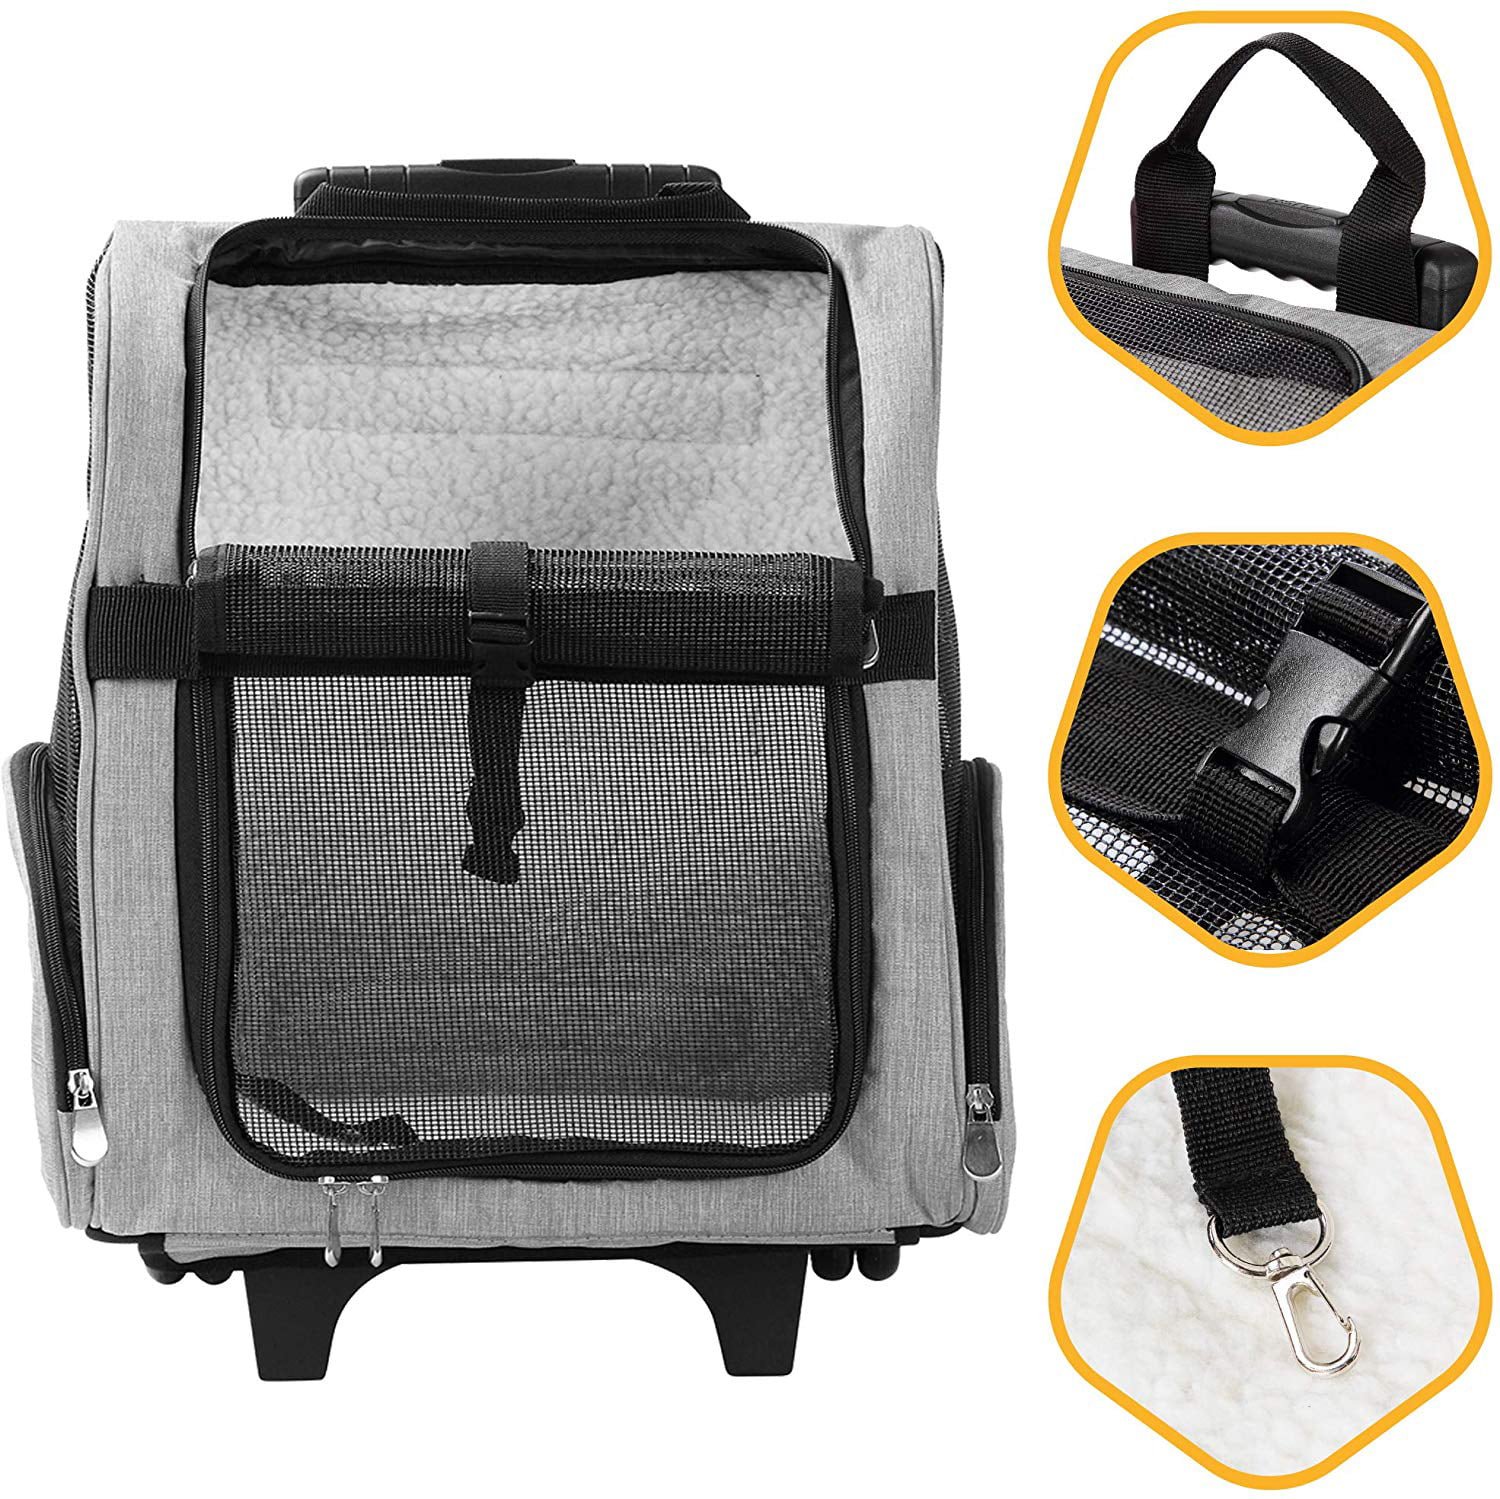 Kopeks Deluxe Backpack Pet Travel Carrier with Double Wheels - Black 